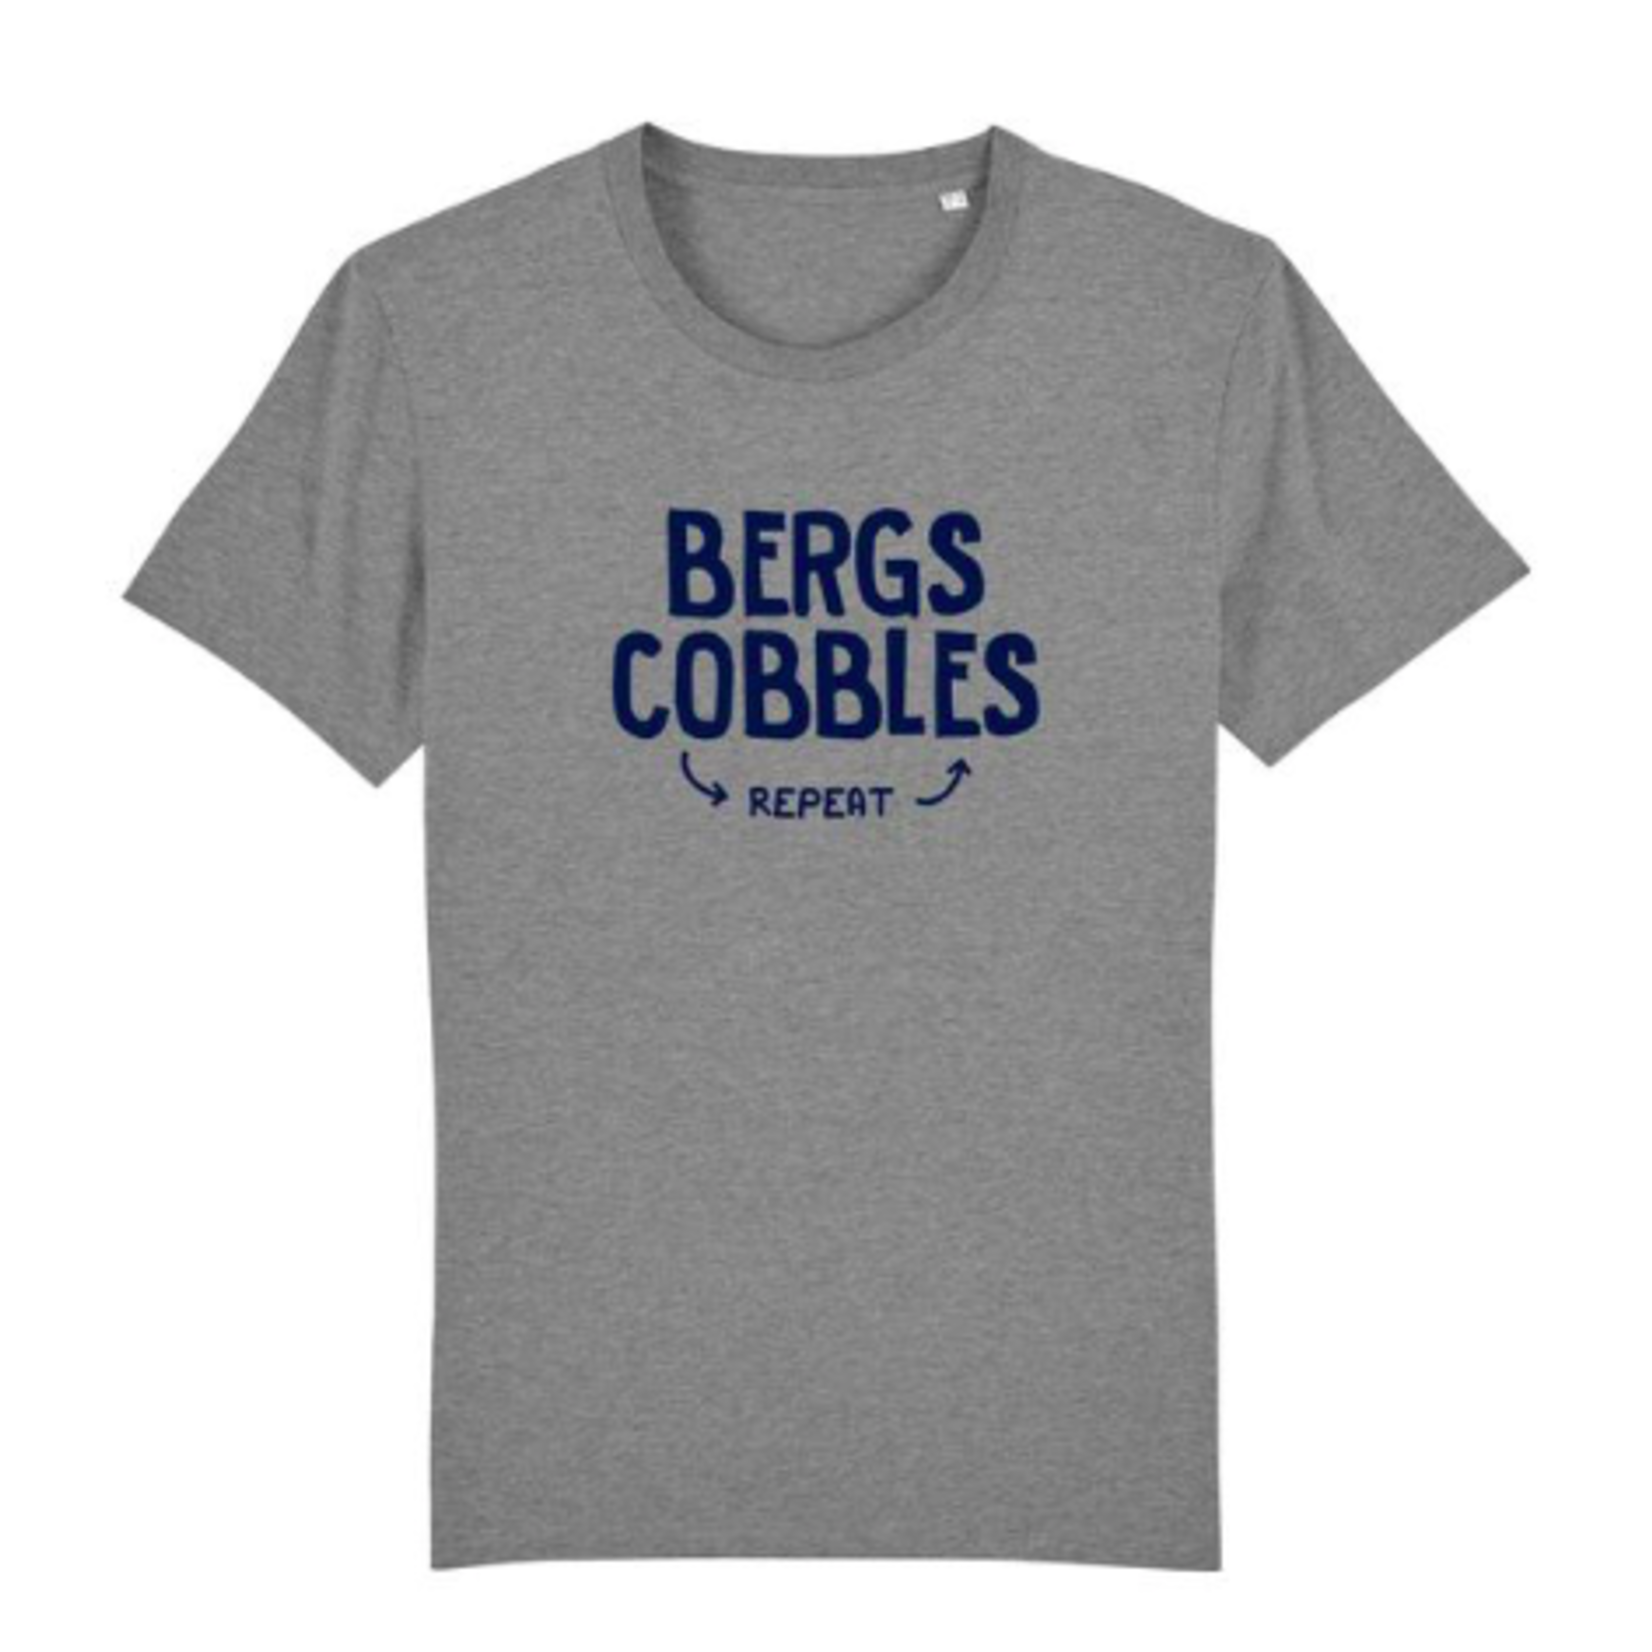 T-shirt 'Bergs, cobbles, repeat' (grey)